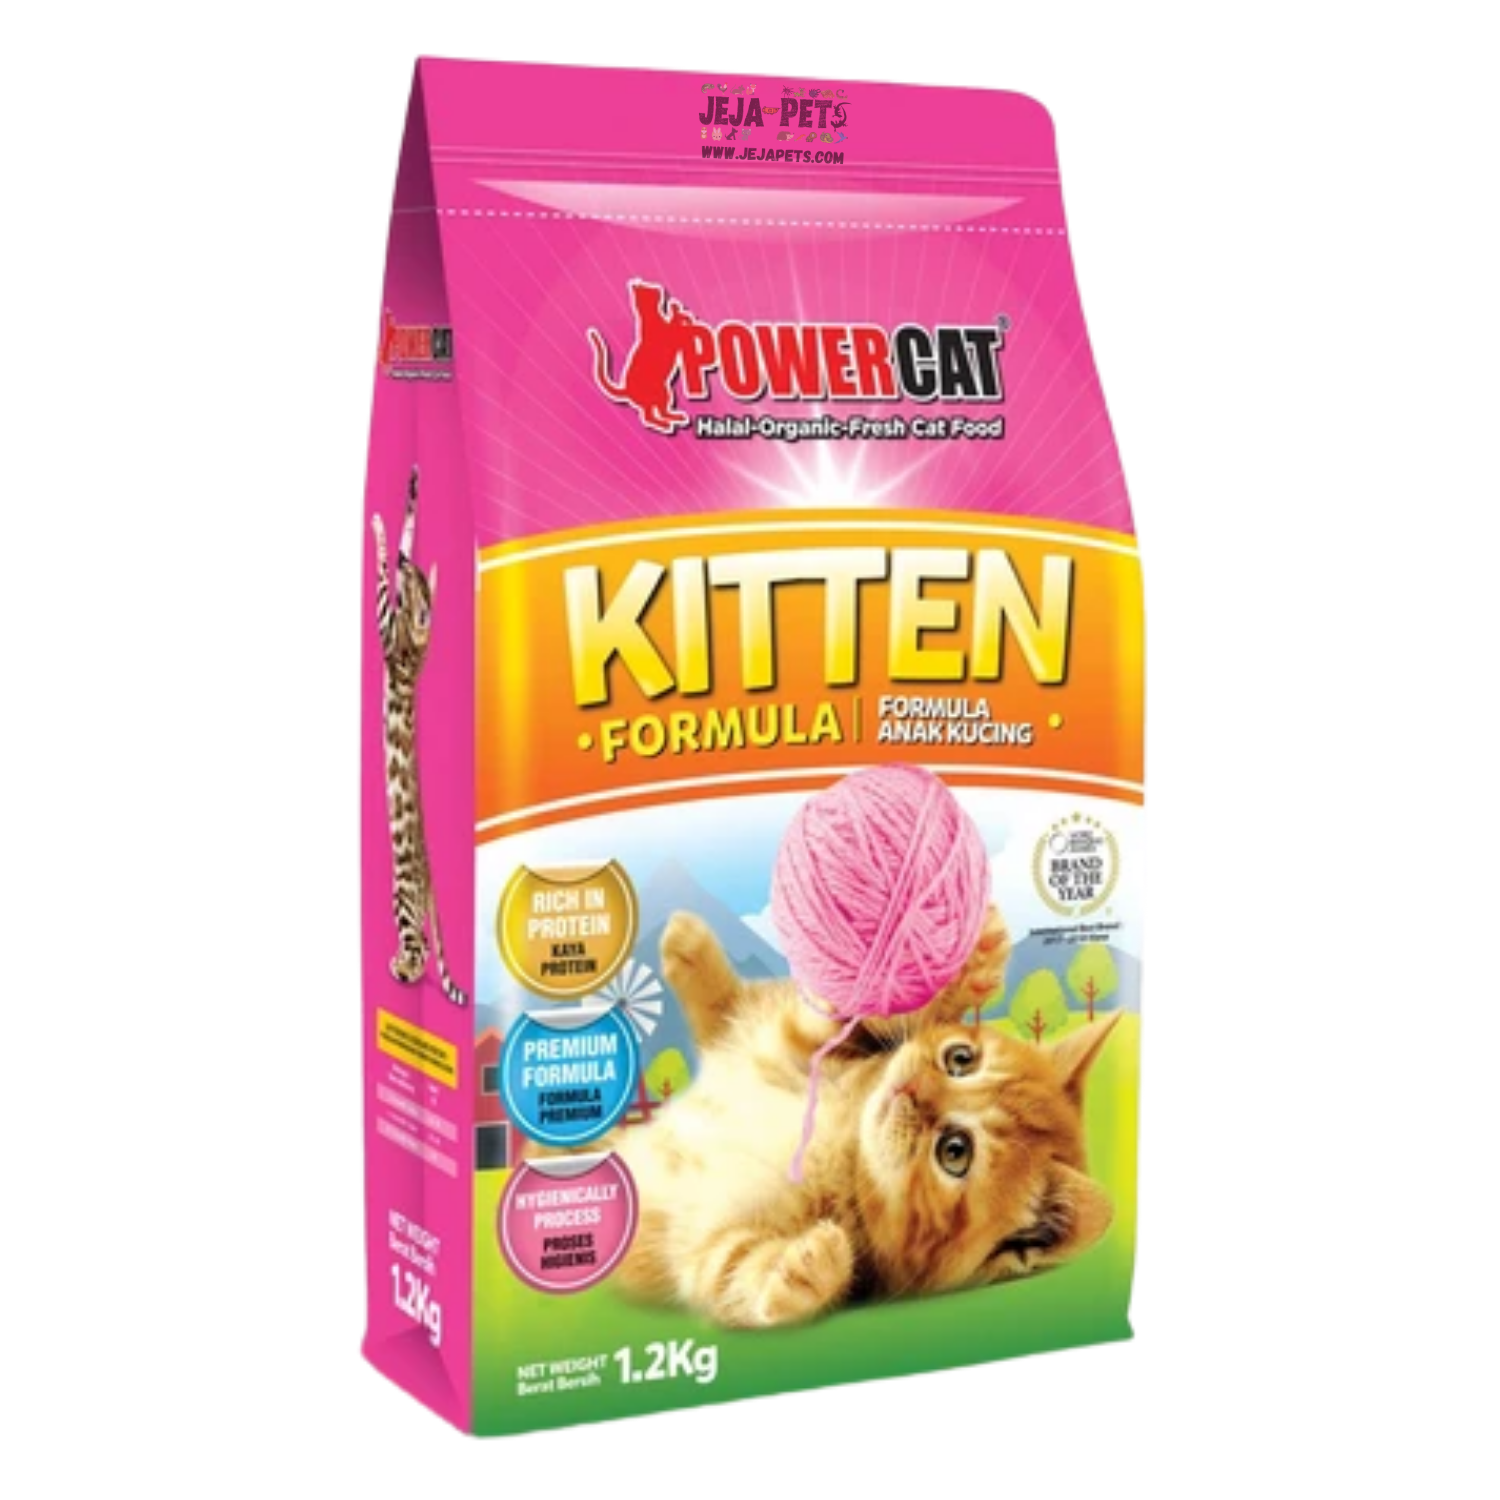 Power Cat Kitten Formula Dry Cat Food - 450g / 1.2kg